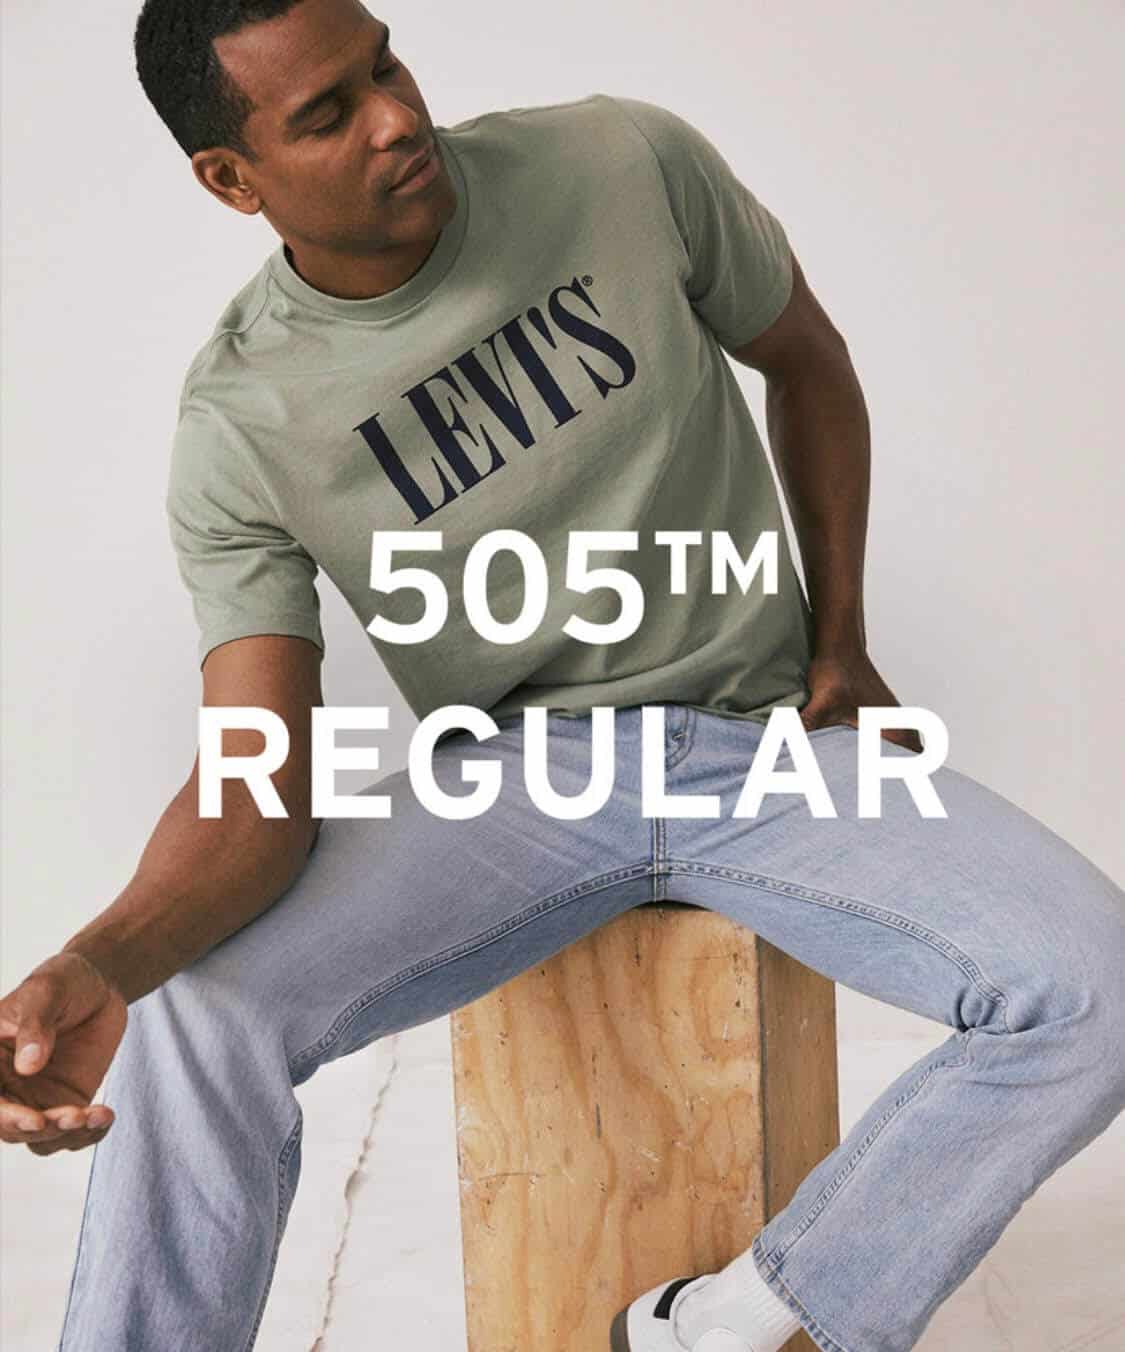 Levis 505 Mens Jeans 34x32 Regular Fit Straight Leg Dark Wash Blue